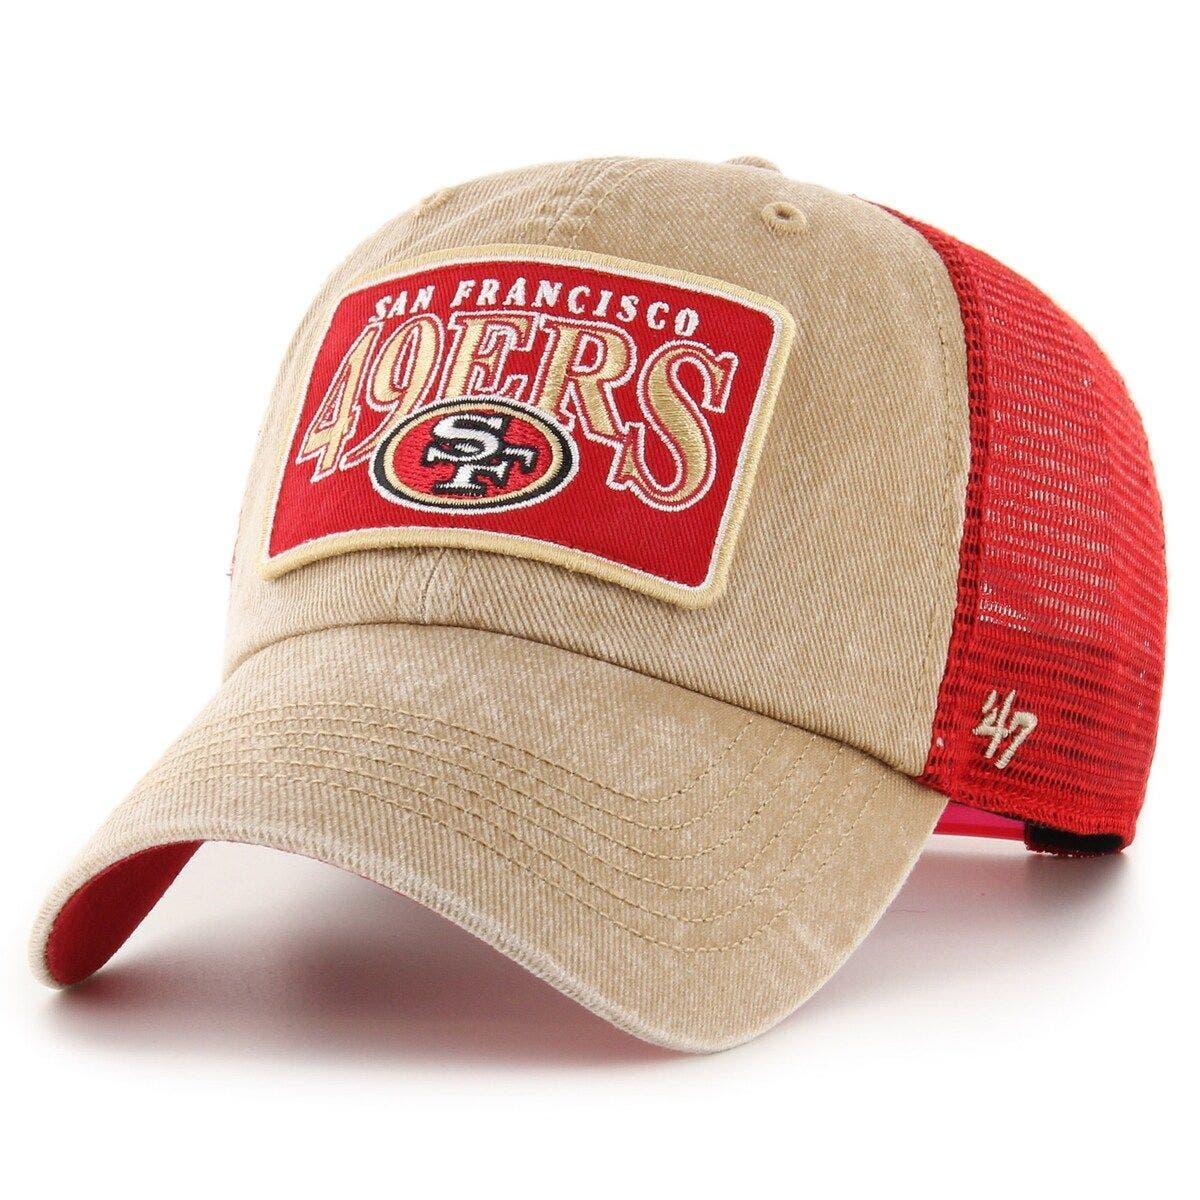 49ers 47 hat